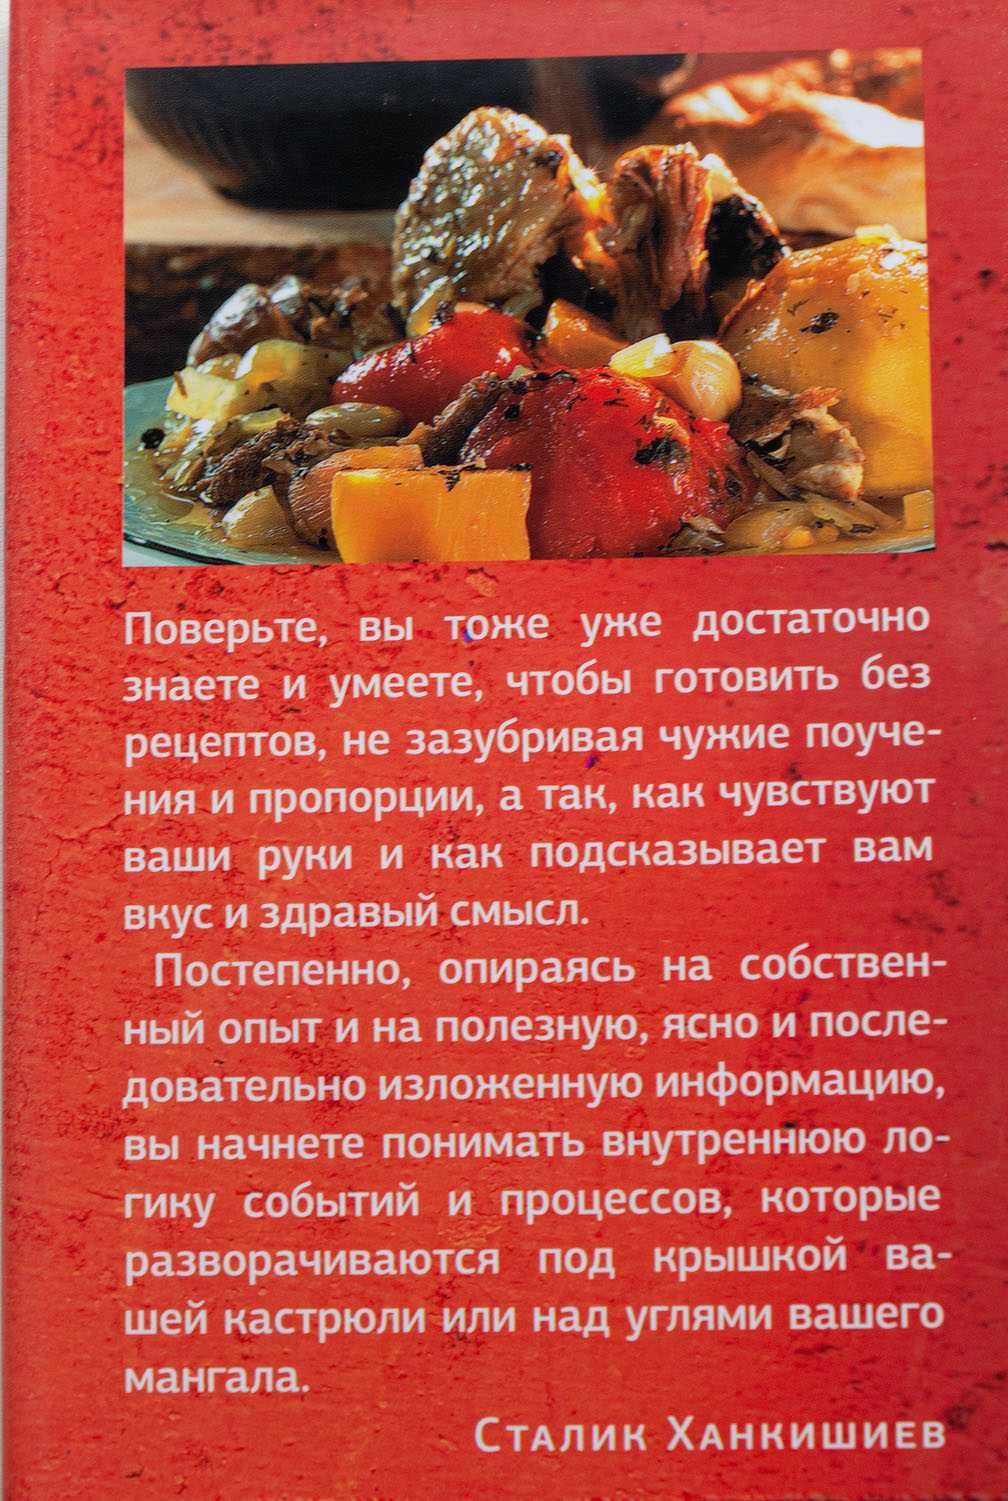 Книга знатока кухни Средней Азии С Ханкишиева Казан, баран и дастархан